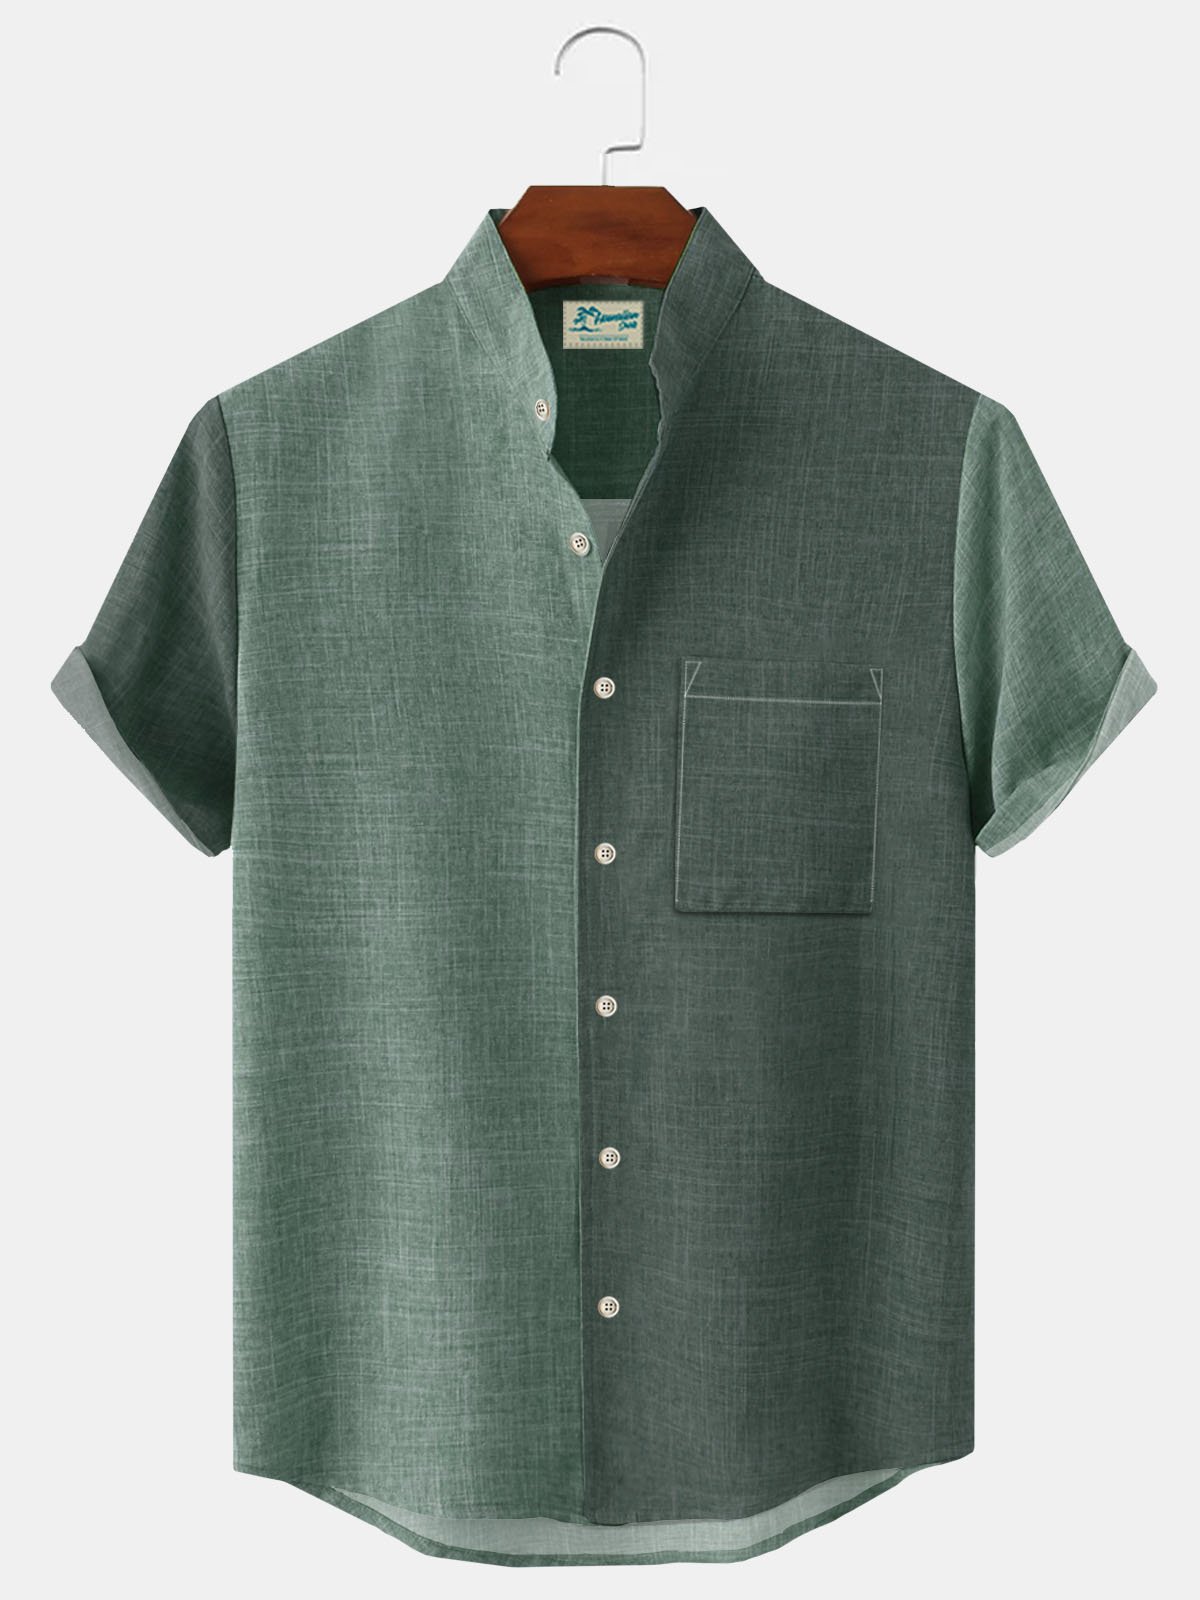 Royaura Natural Fiber Contrast Color Stitching Men's Stand Collar Button Pocket Shirt